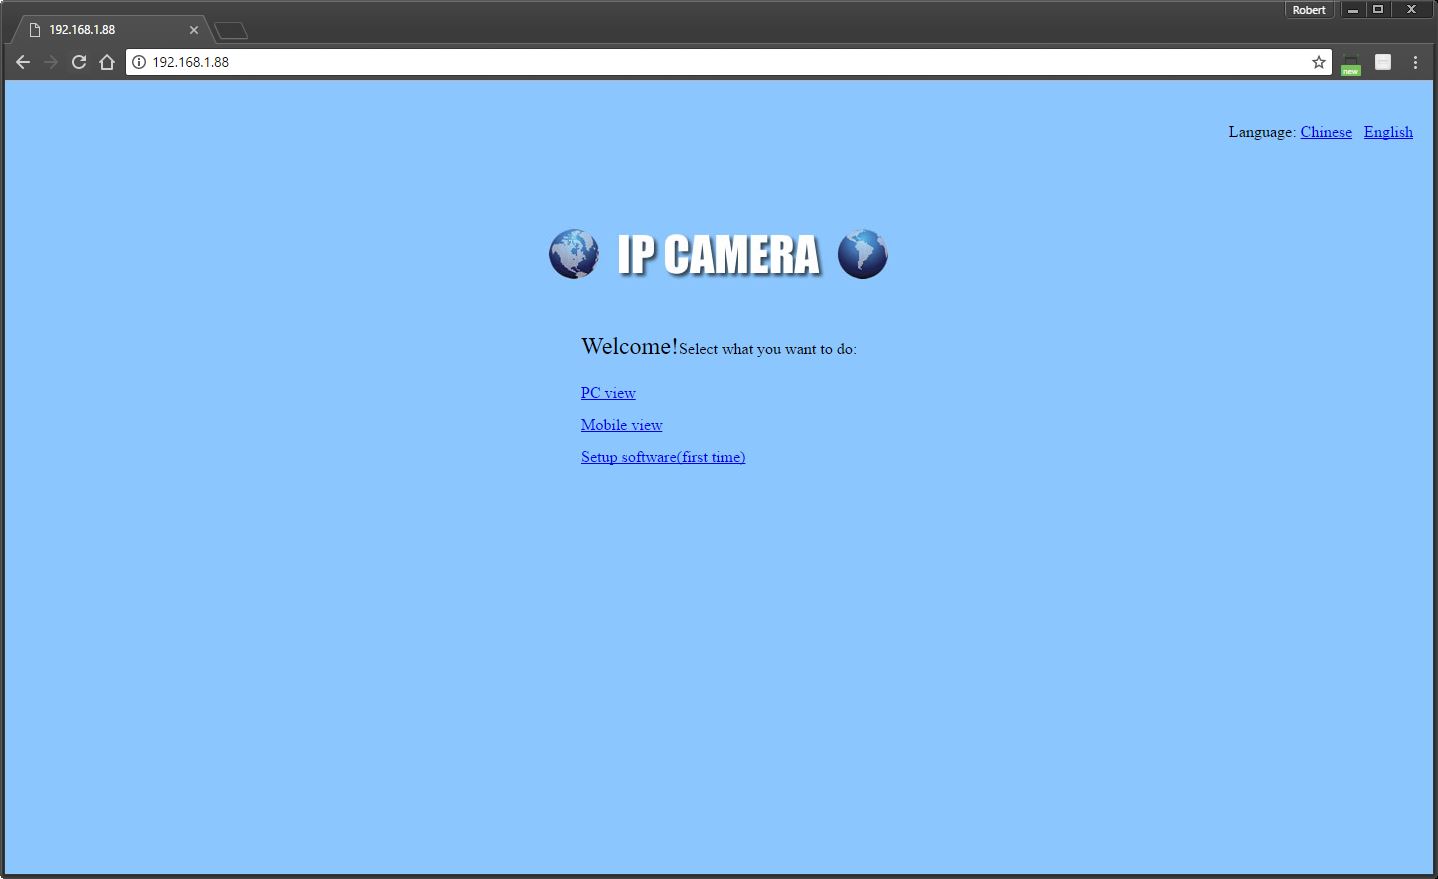 ip camera browser view